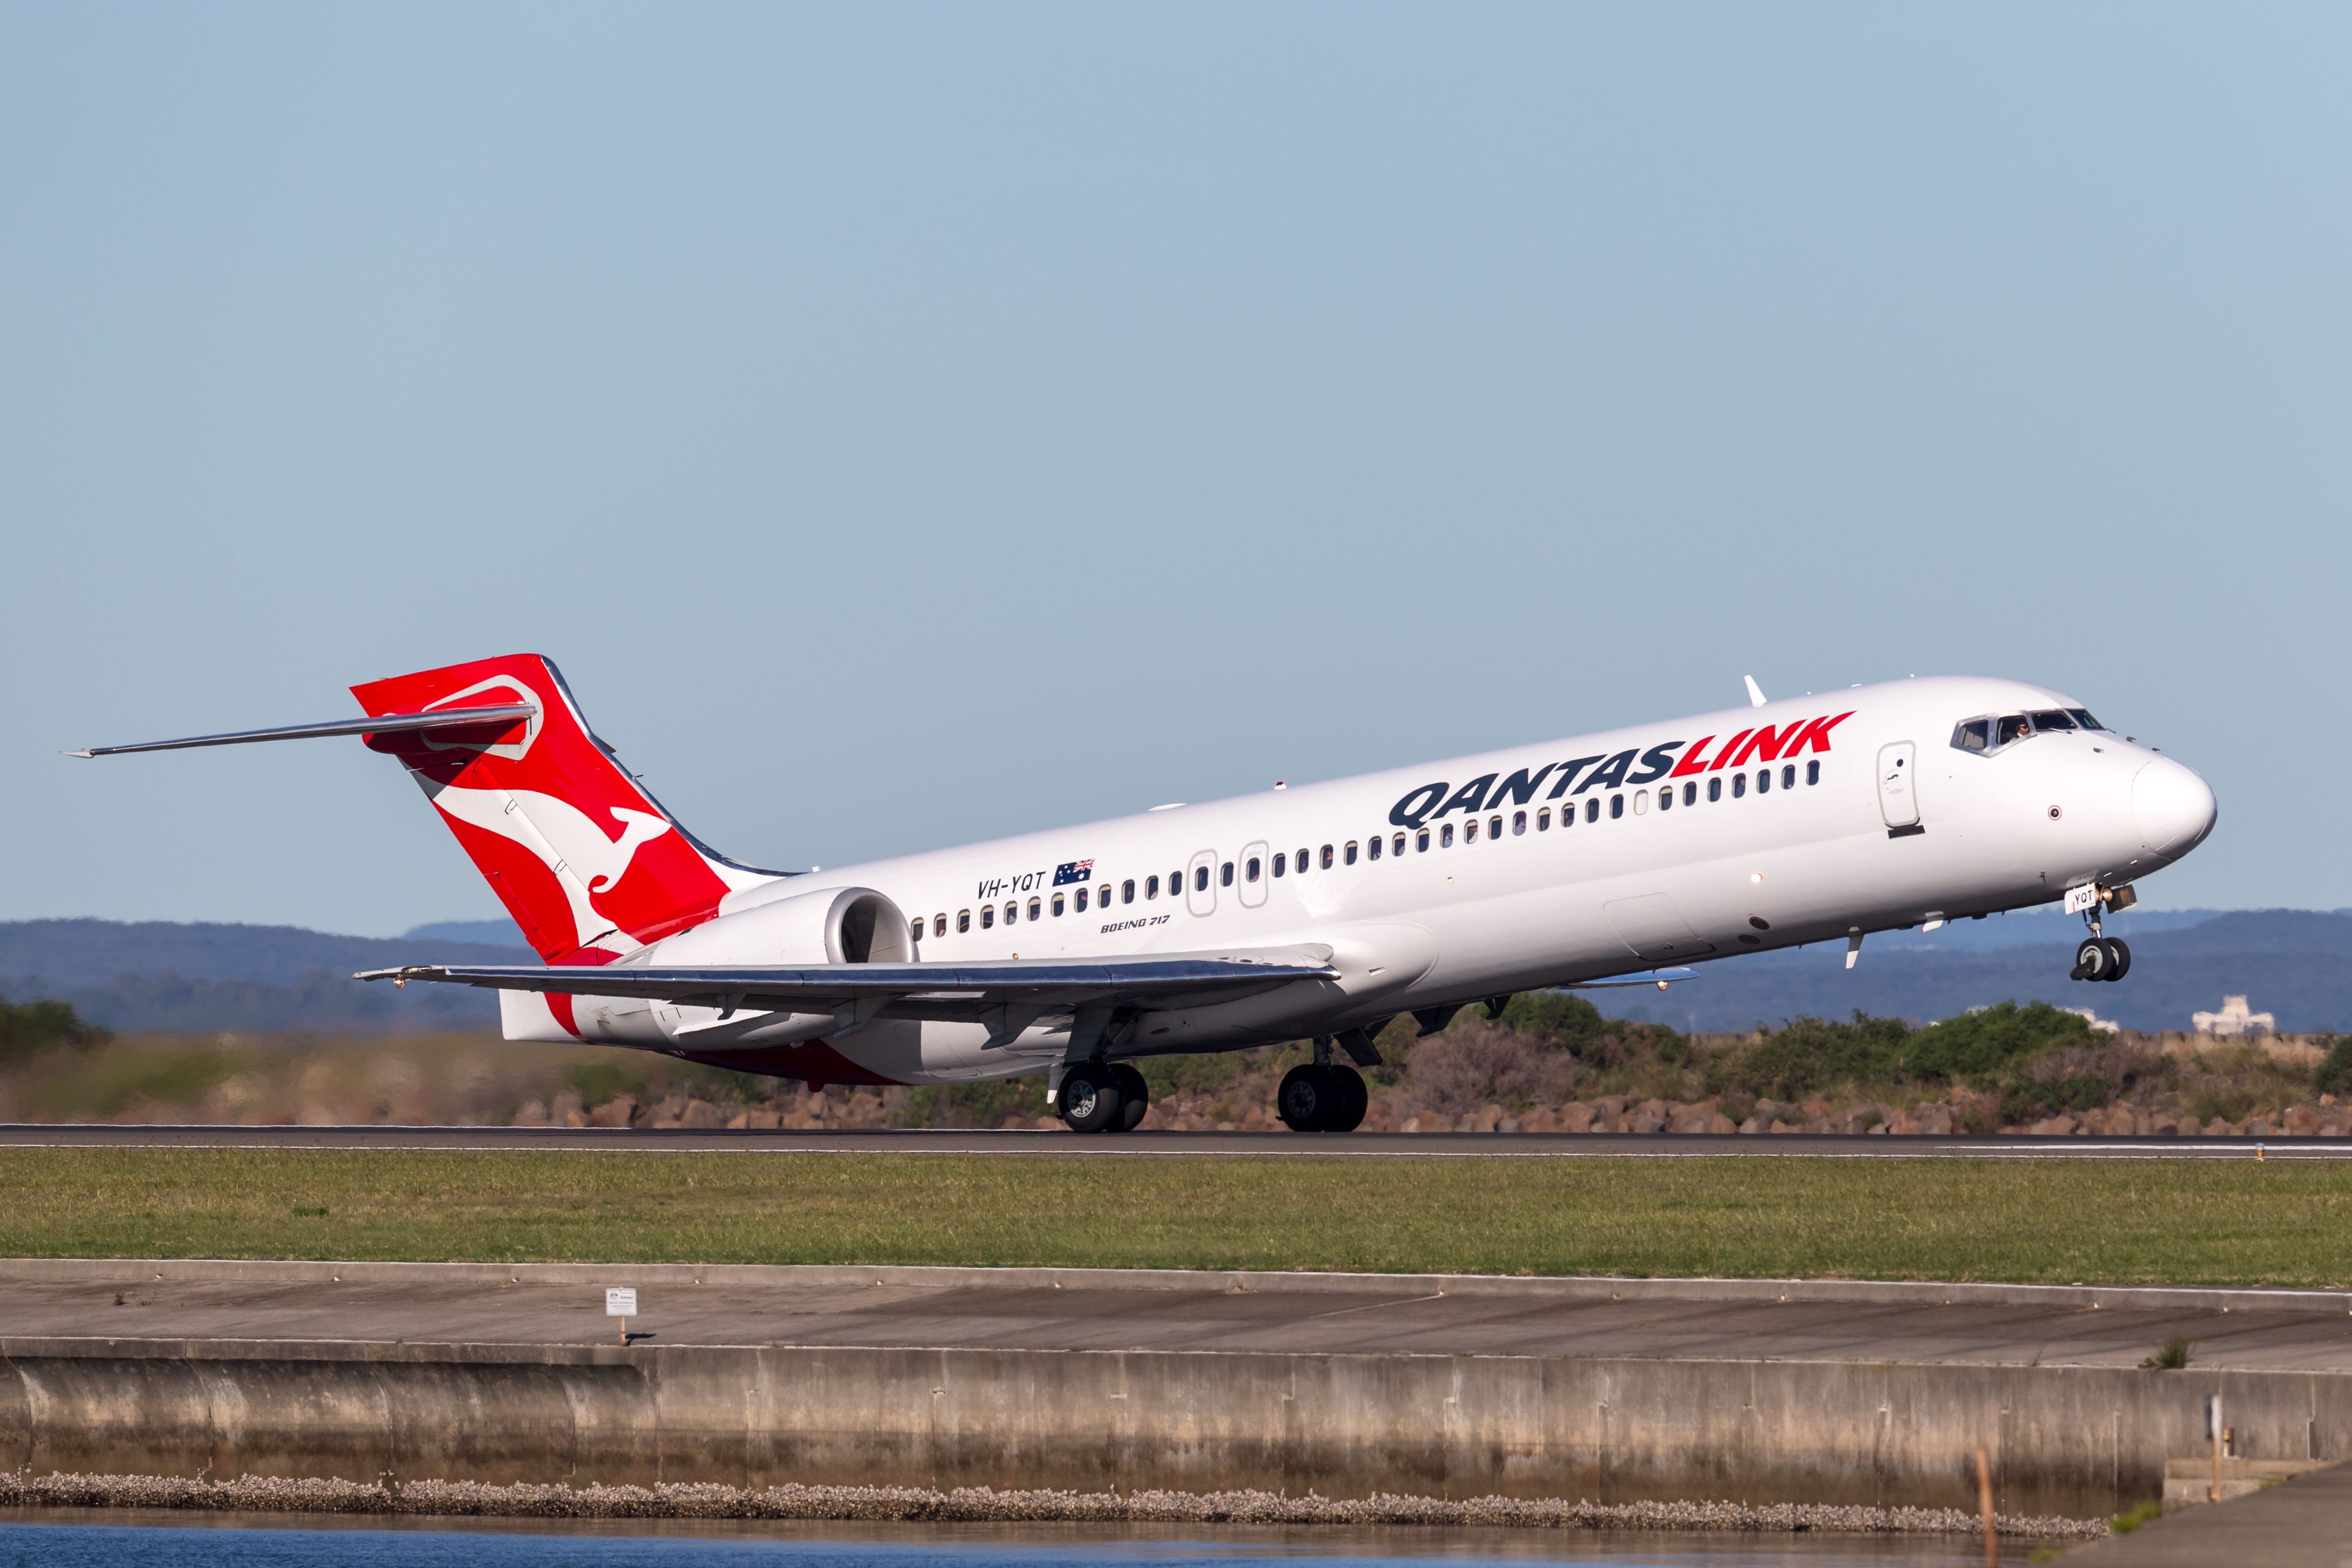 QantasLink Boeing 717 Departing From Sydney